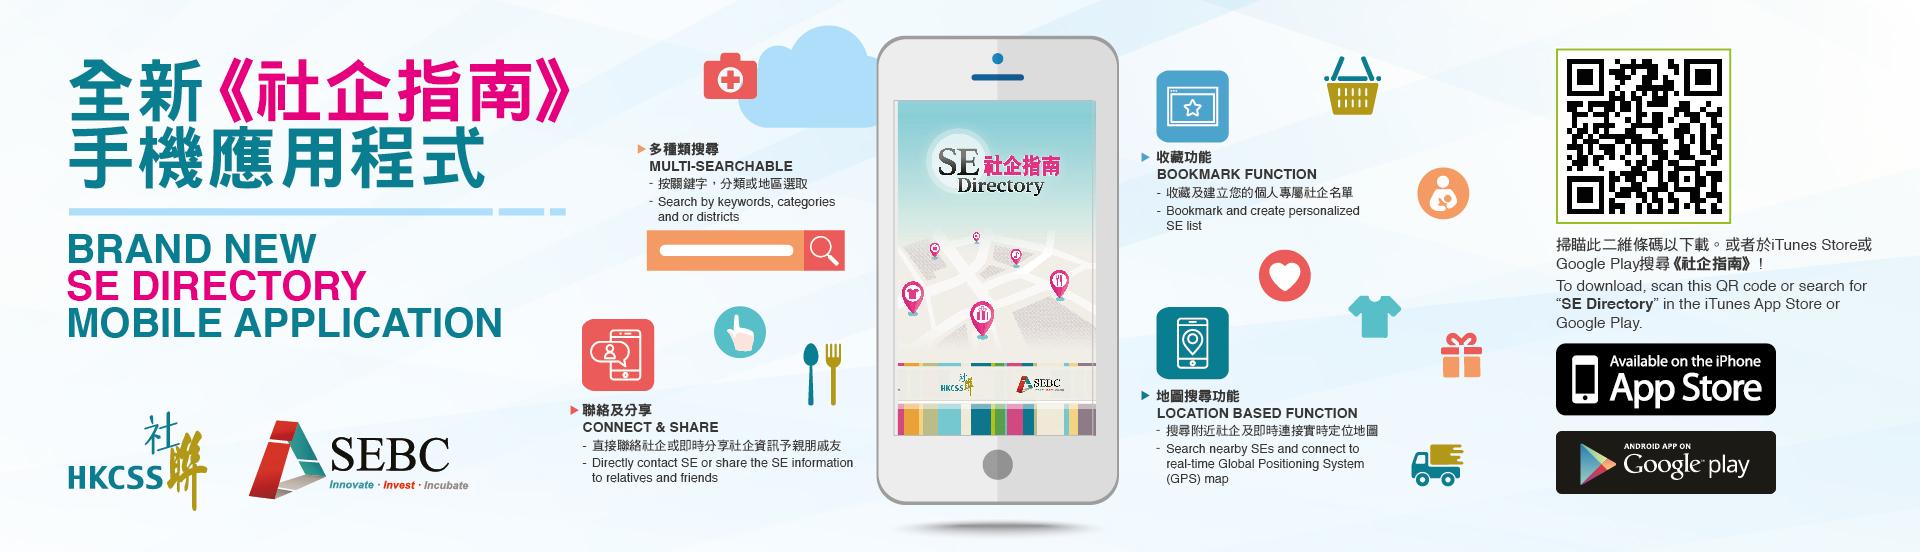 SE Directory mobile app